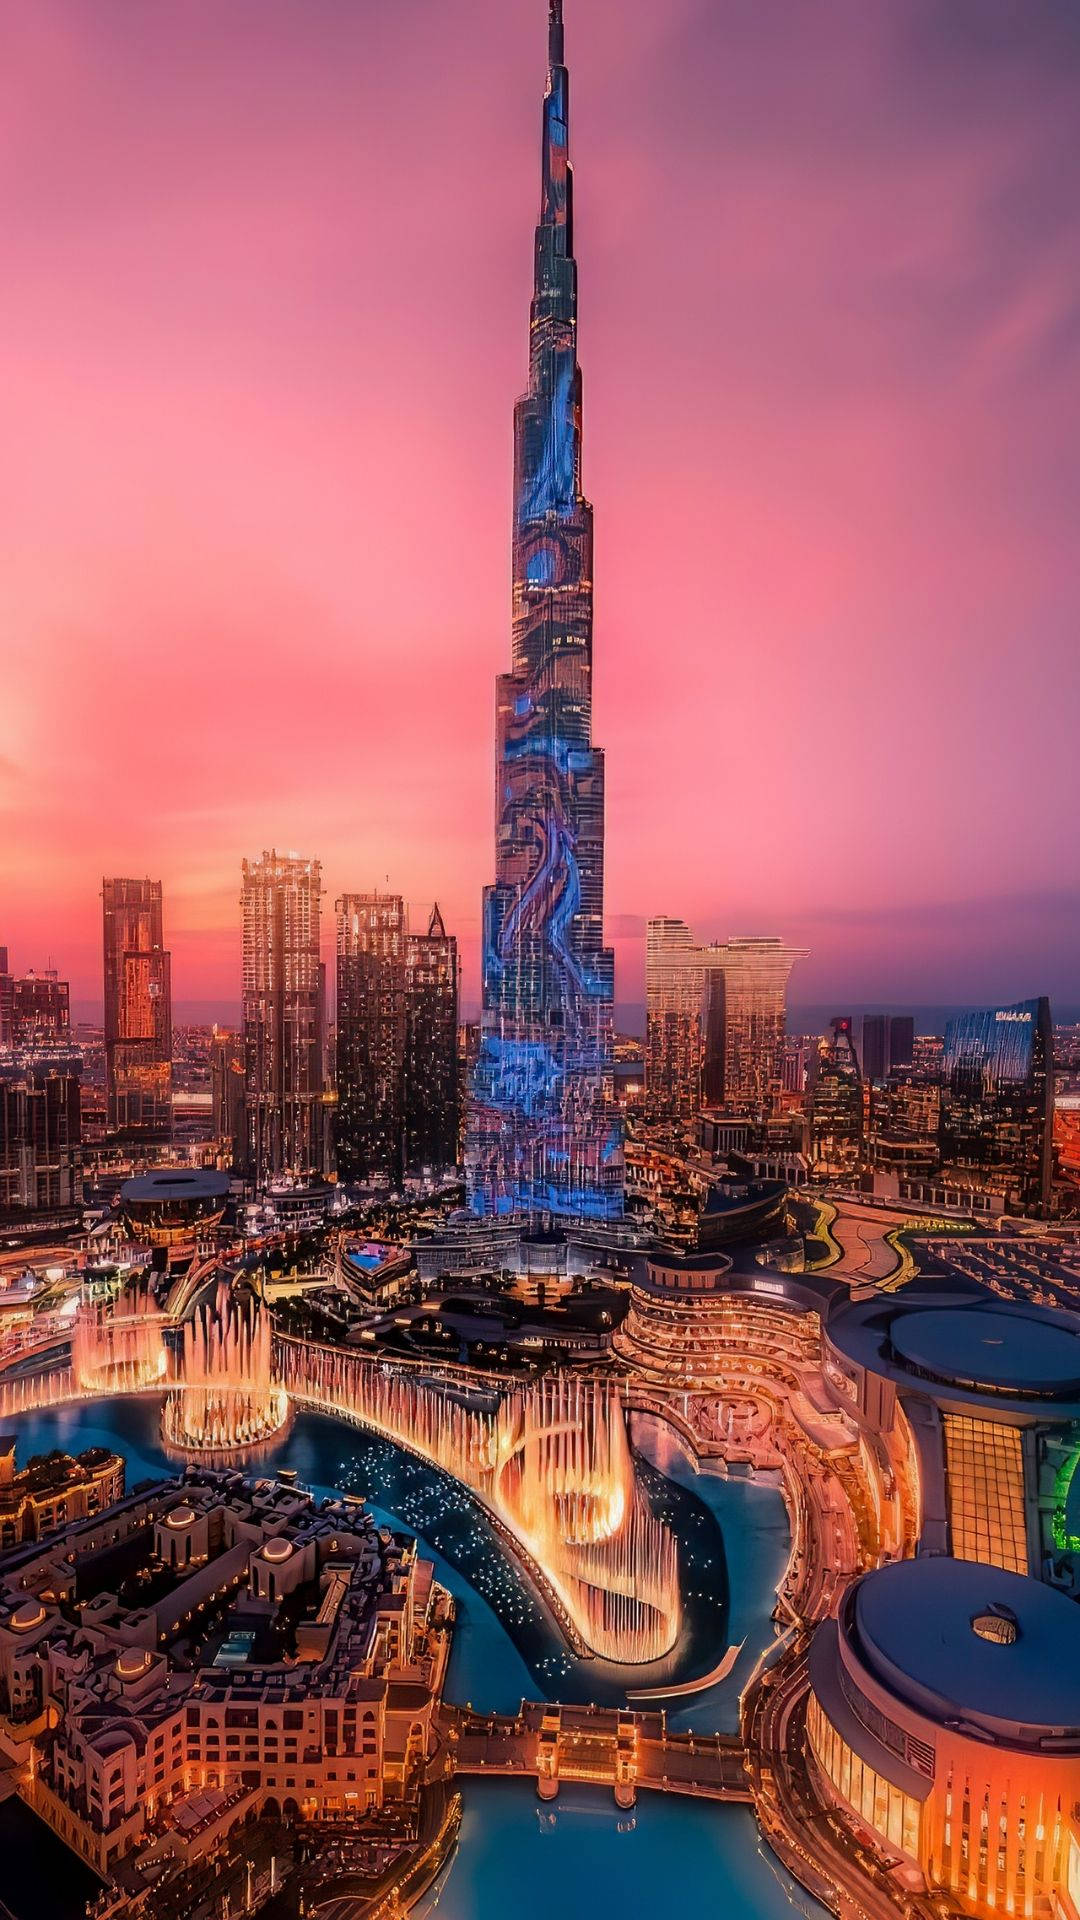 Dubai 4K Wallpaper 59 images